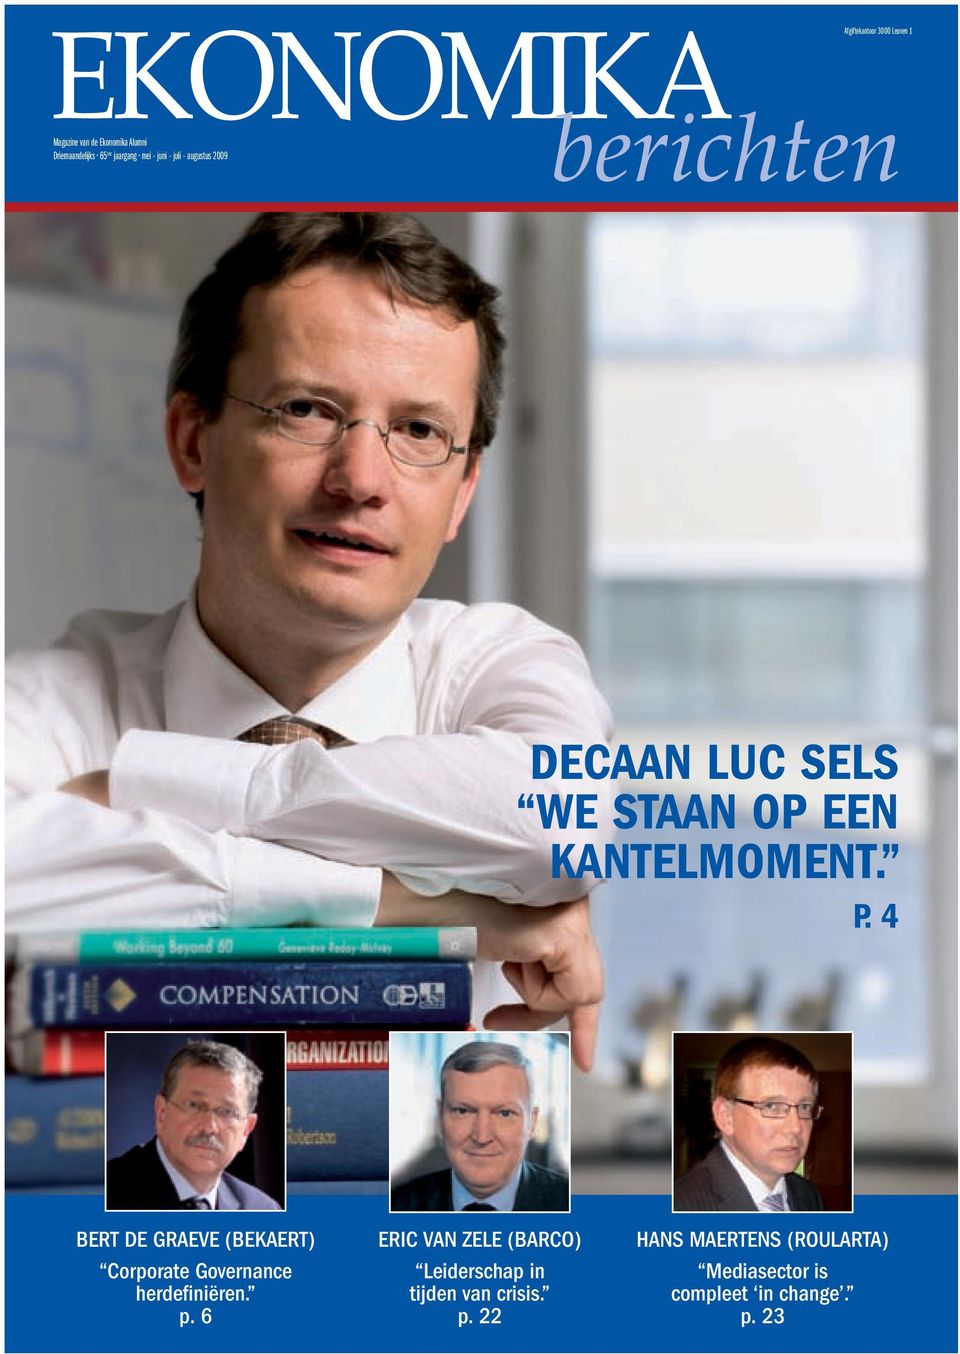 4 Bert De GraeVe (Bekaert) corporate Governance herdefiniëren. p.